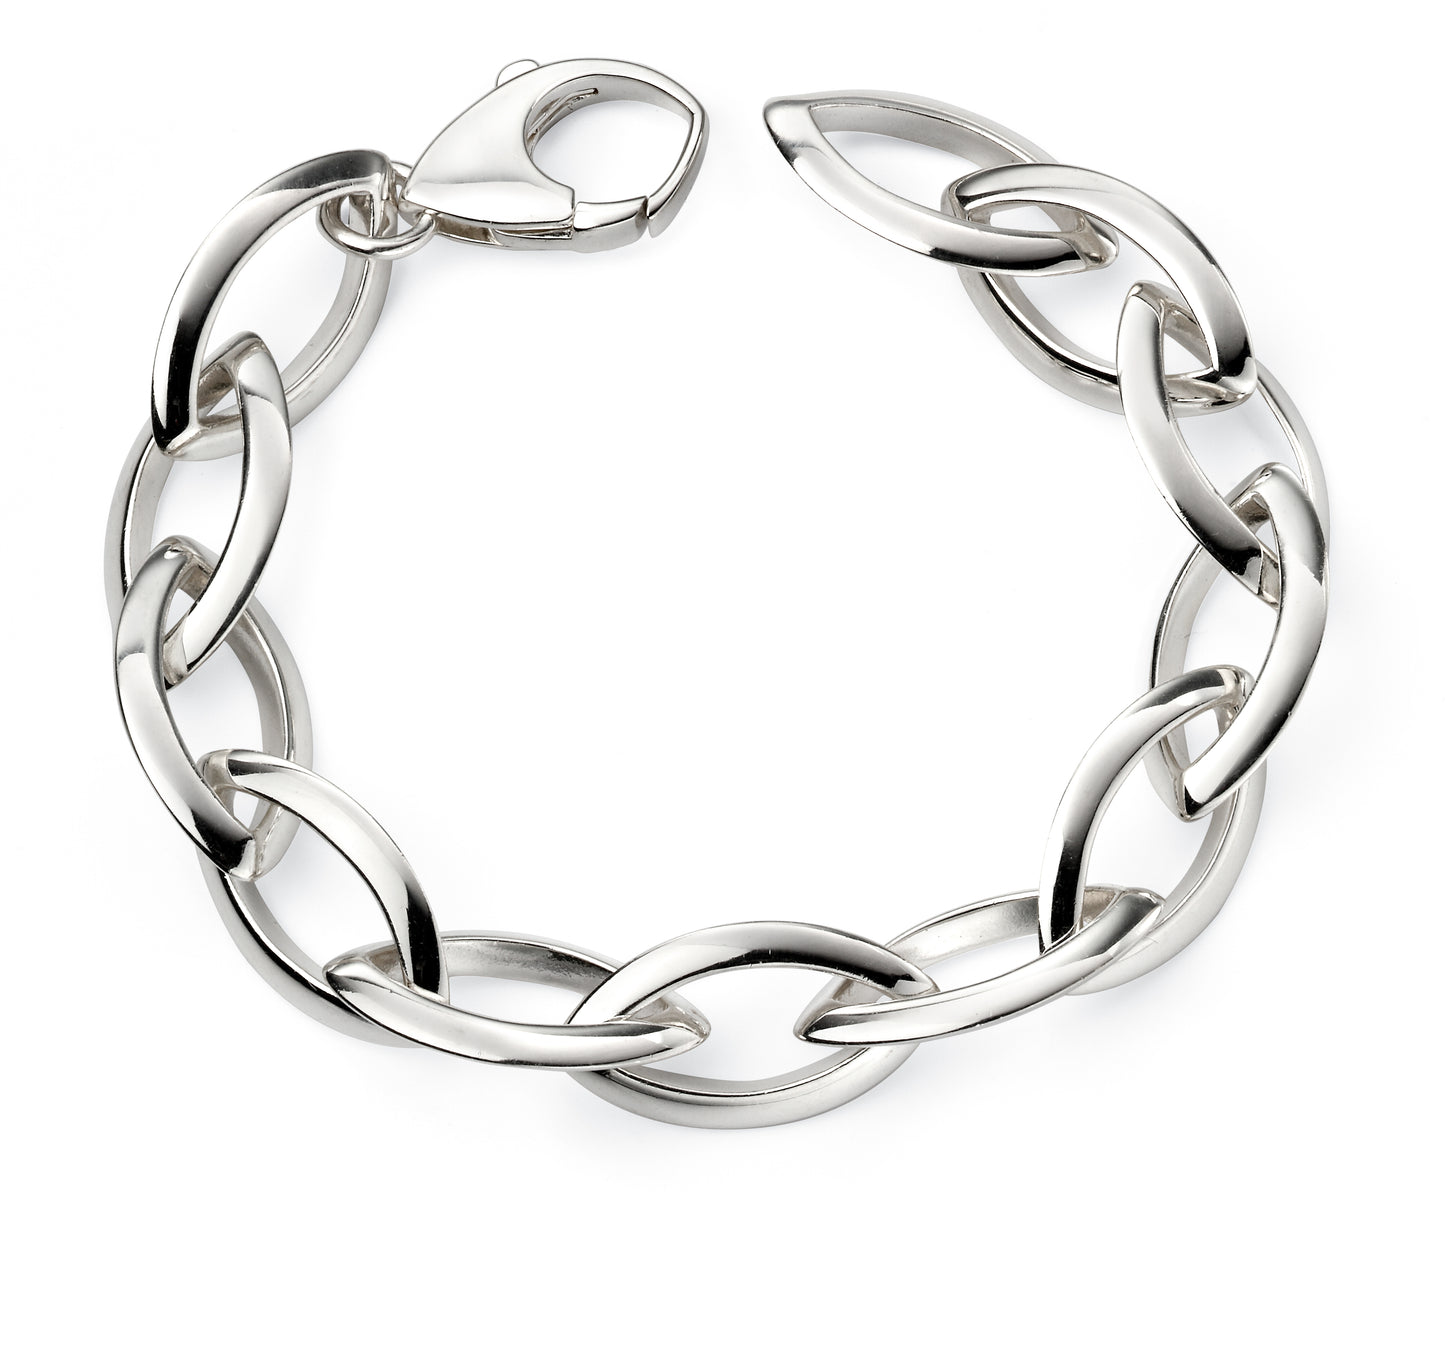 Marquise Chain Bracelet